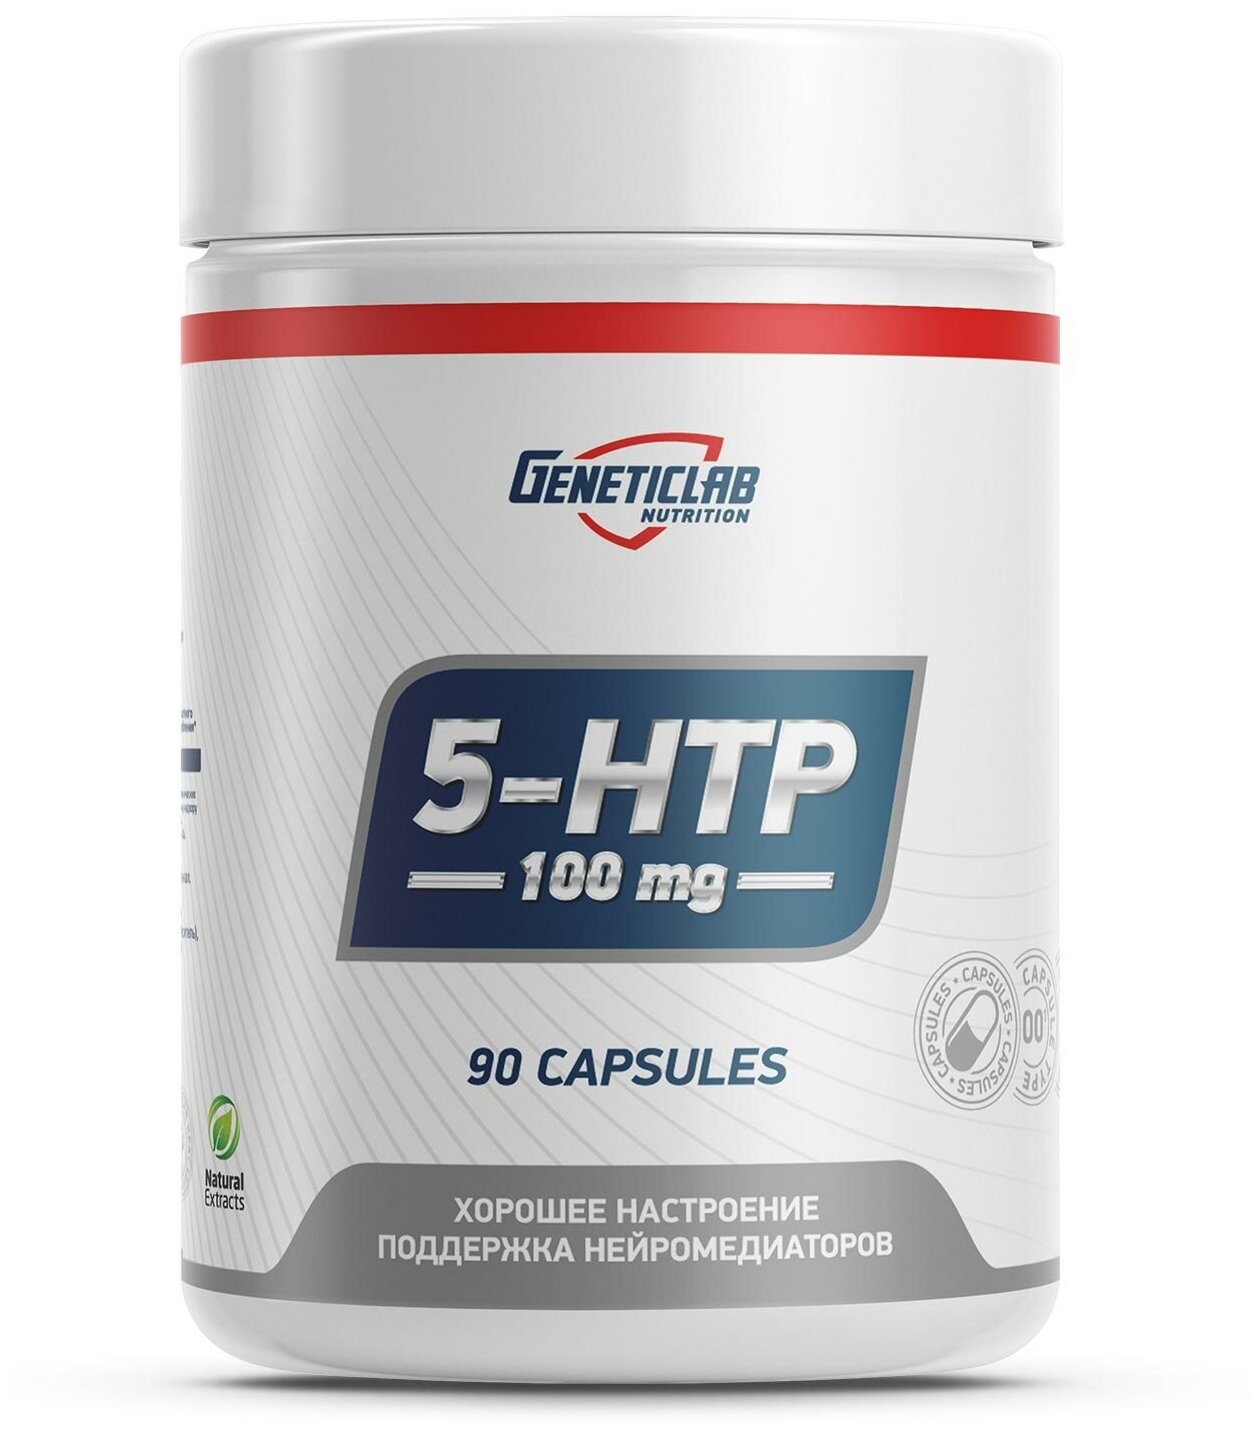 5-HTP, 5-гидрокситриптофан GeneticLab Nutrition, 5-HTP, 90 капсул, Россия, 100 мг